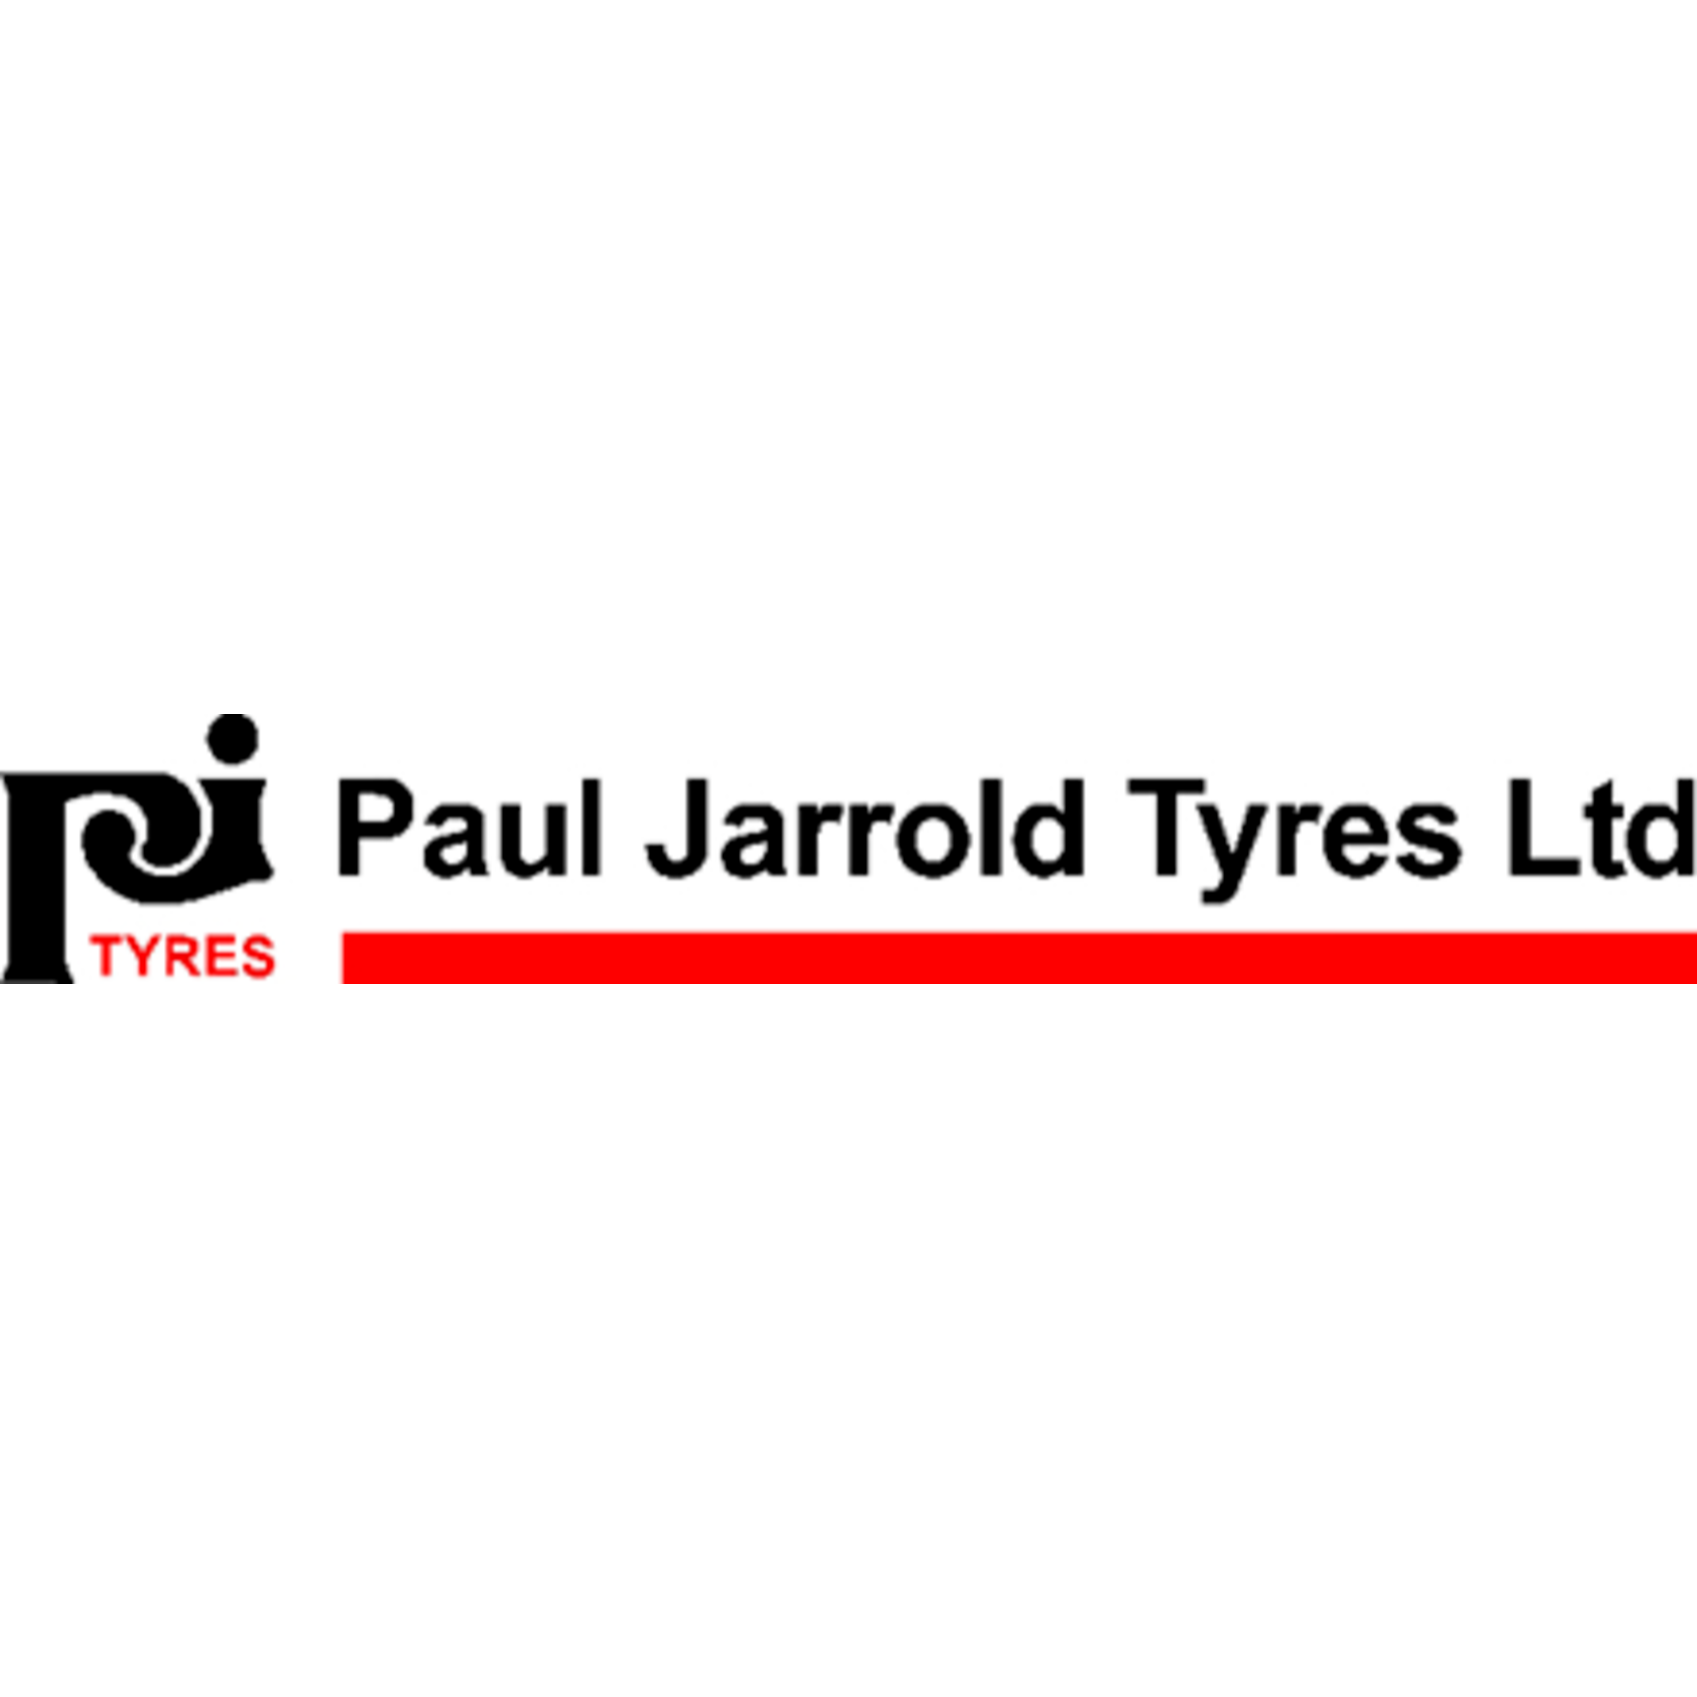 Paul Jarrold Tyres Ltd - Monmouth, Gwent NP25 5JA - 01600 712241 | ShowMeLocal.com